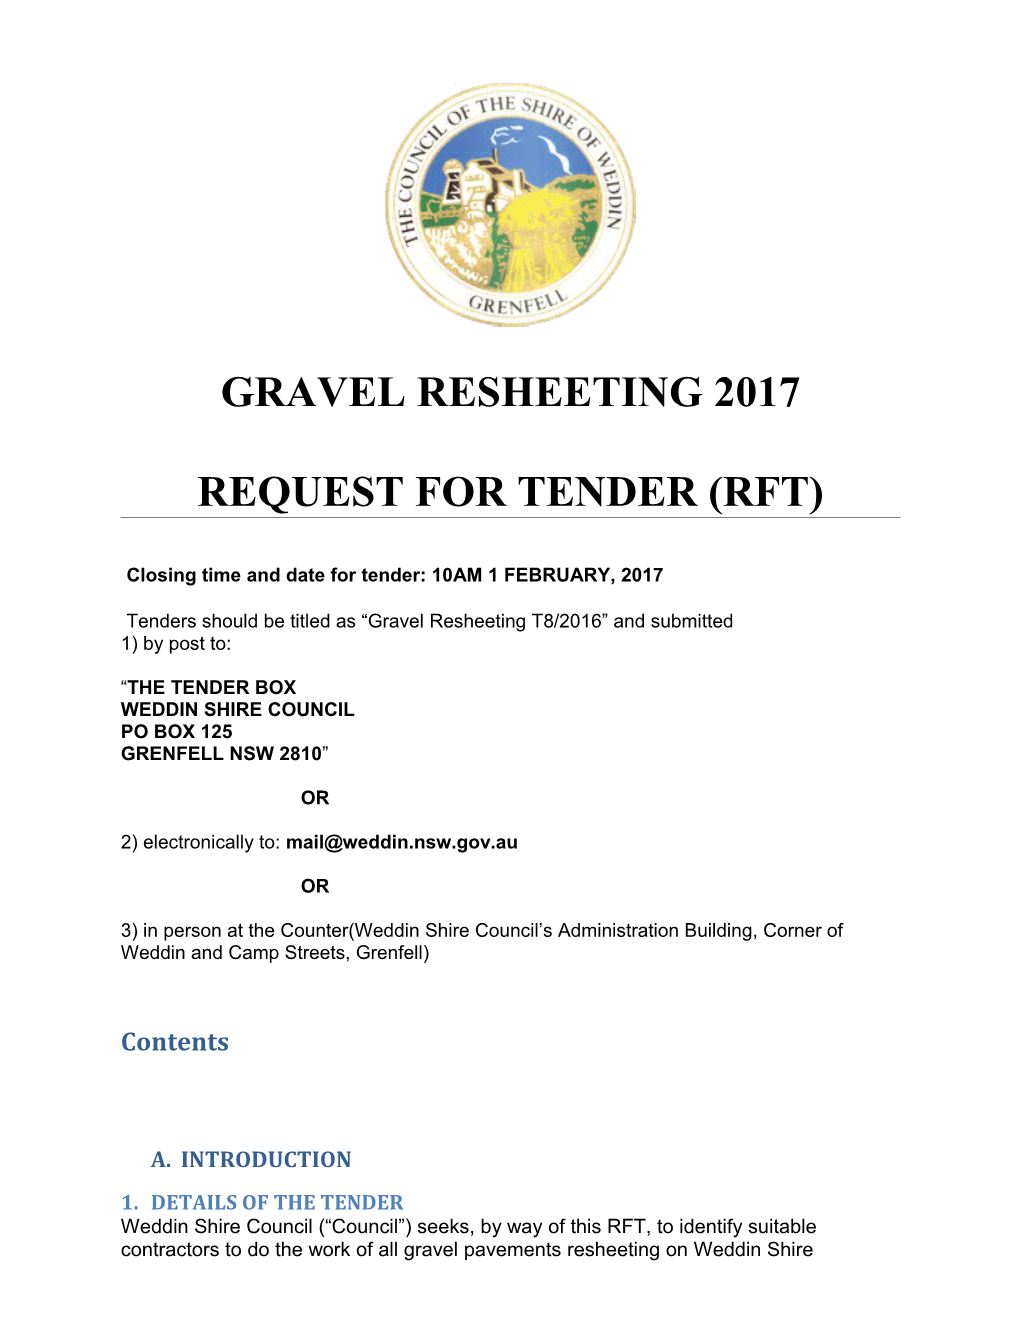 Weddin Shire Councilrequest for Tendert8/2016: Gravel Resheeting 2017